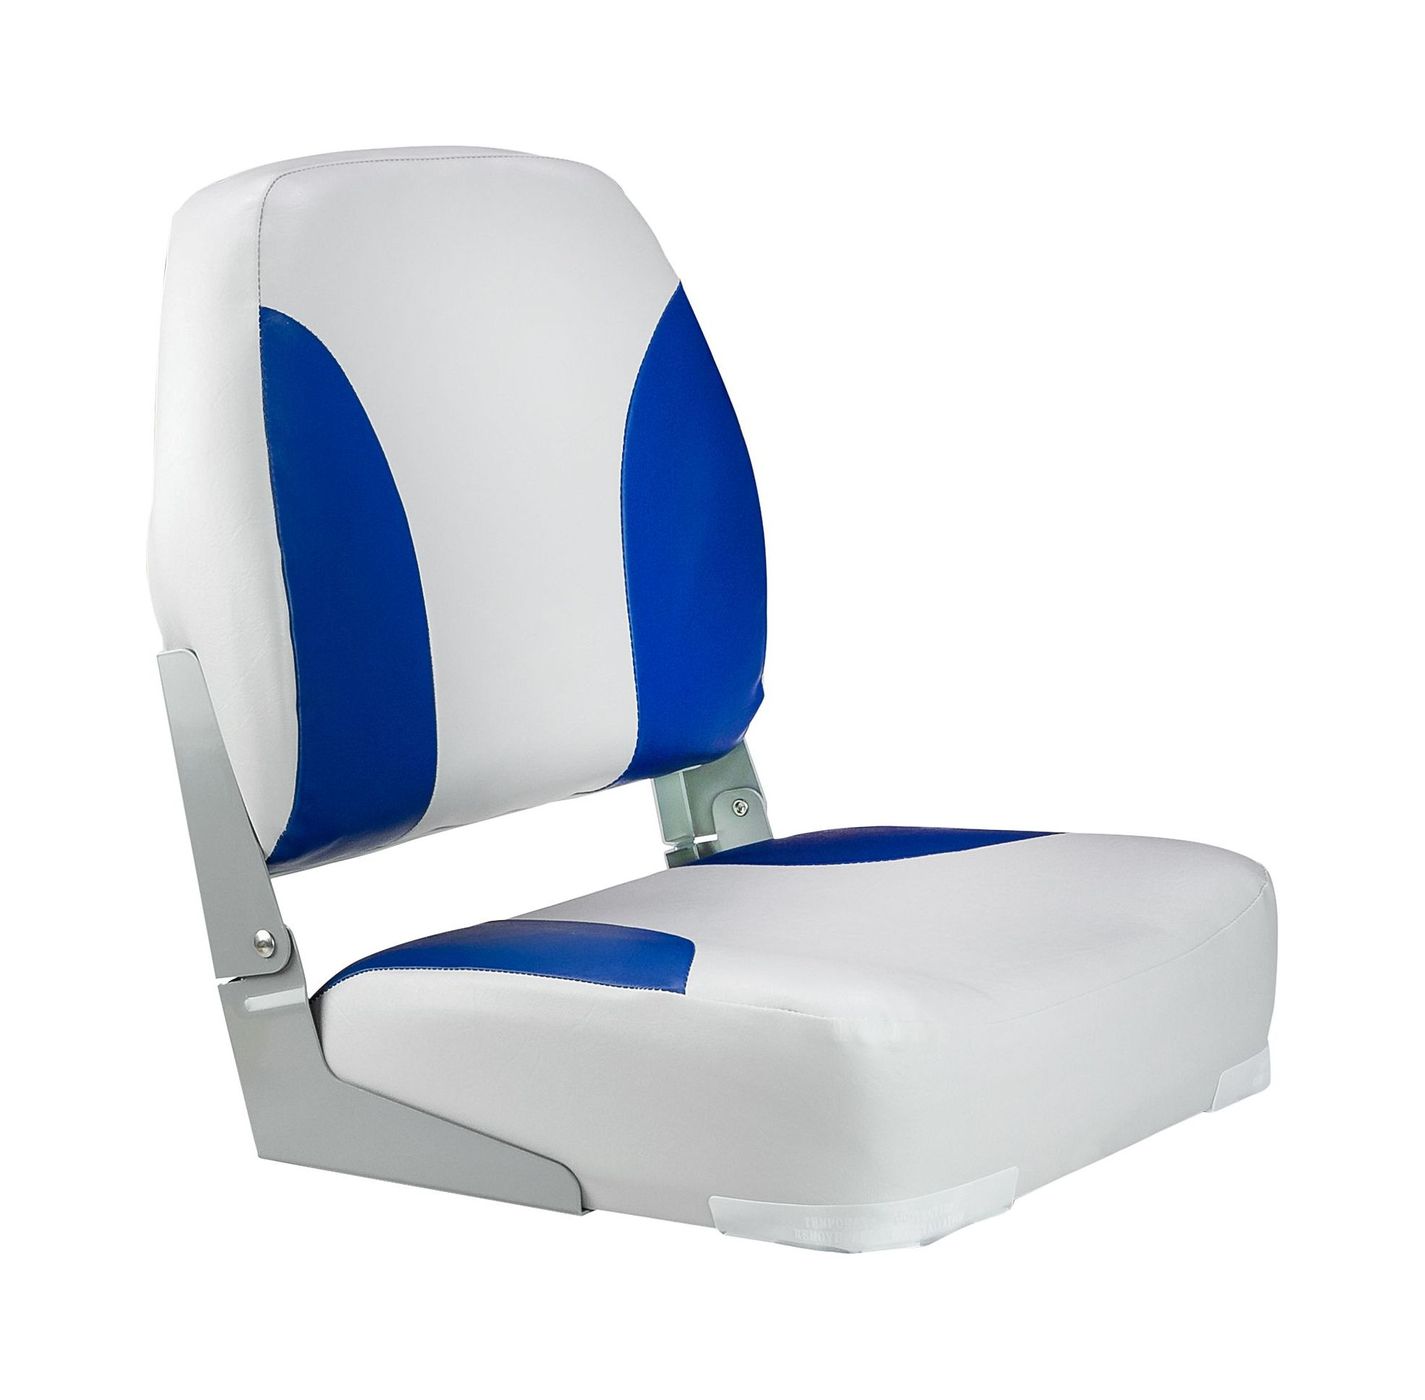 Кресло мягкое складное Classic, обивка винил, цвет серый/синий, Marine Rocket 75102GB-MR кресло мягкое складное classic обивка винил серый синий marine rocket 75102gb mr